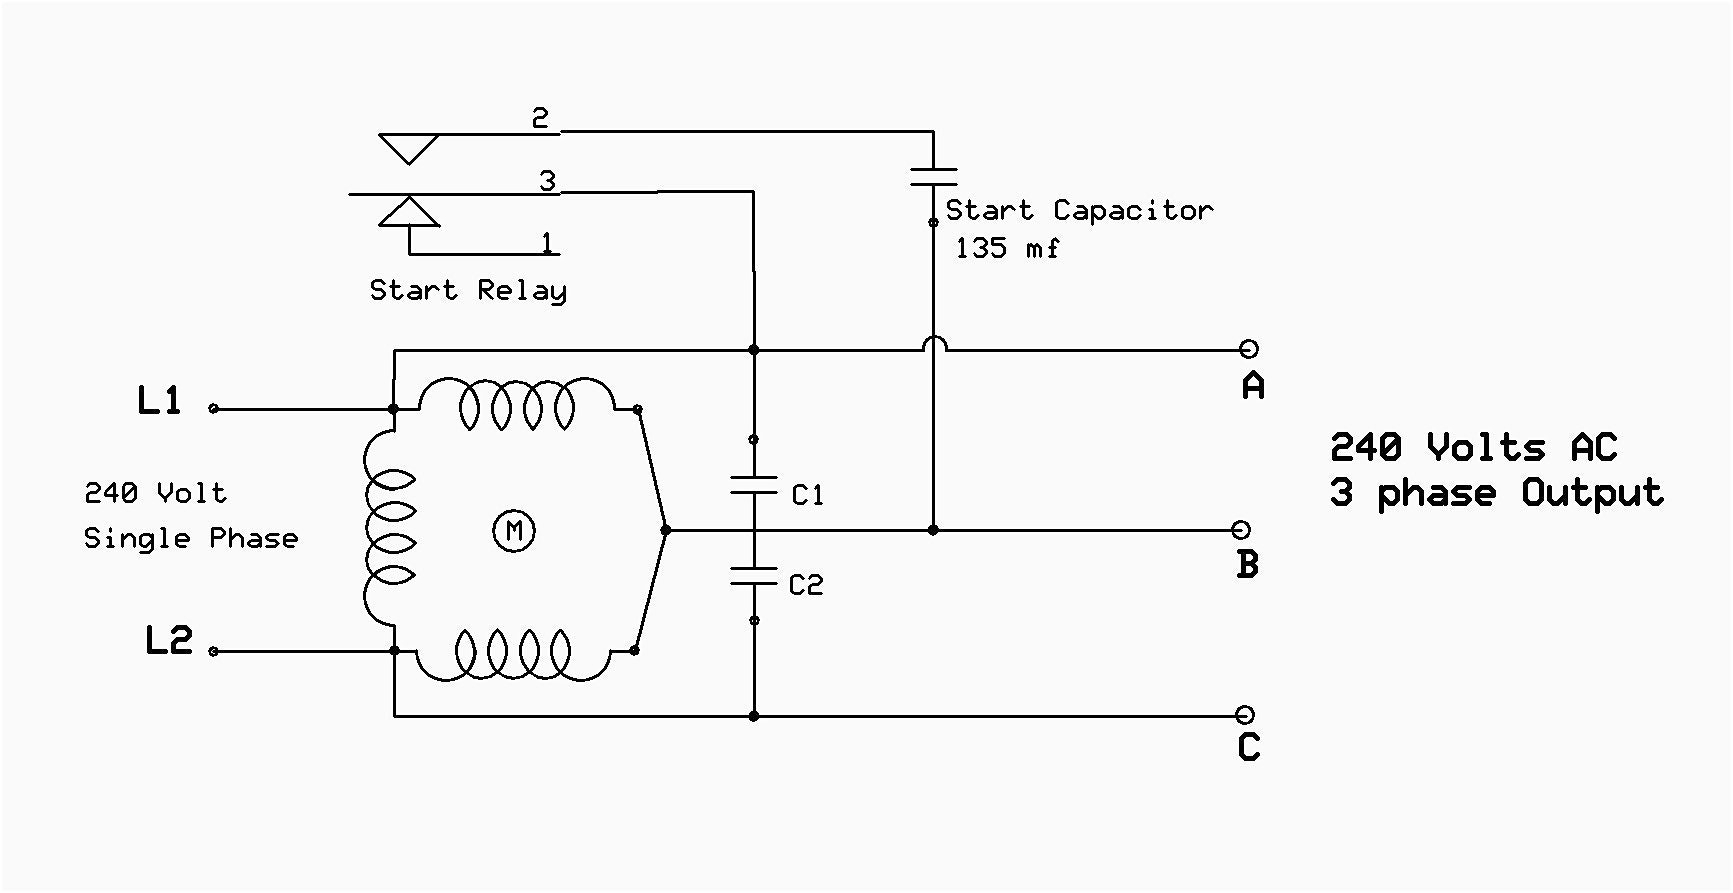 Wiring Diagram Single Phase Motor 6 Lead | Wiring Library - 6 Lead Single Phase Motor Wiring Diagram